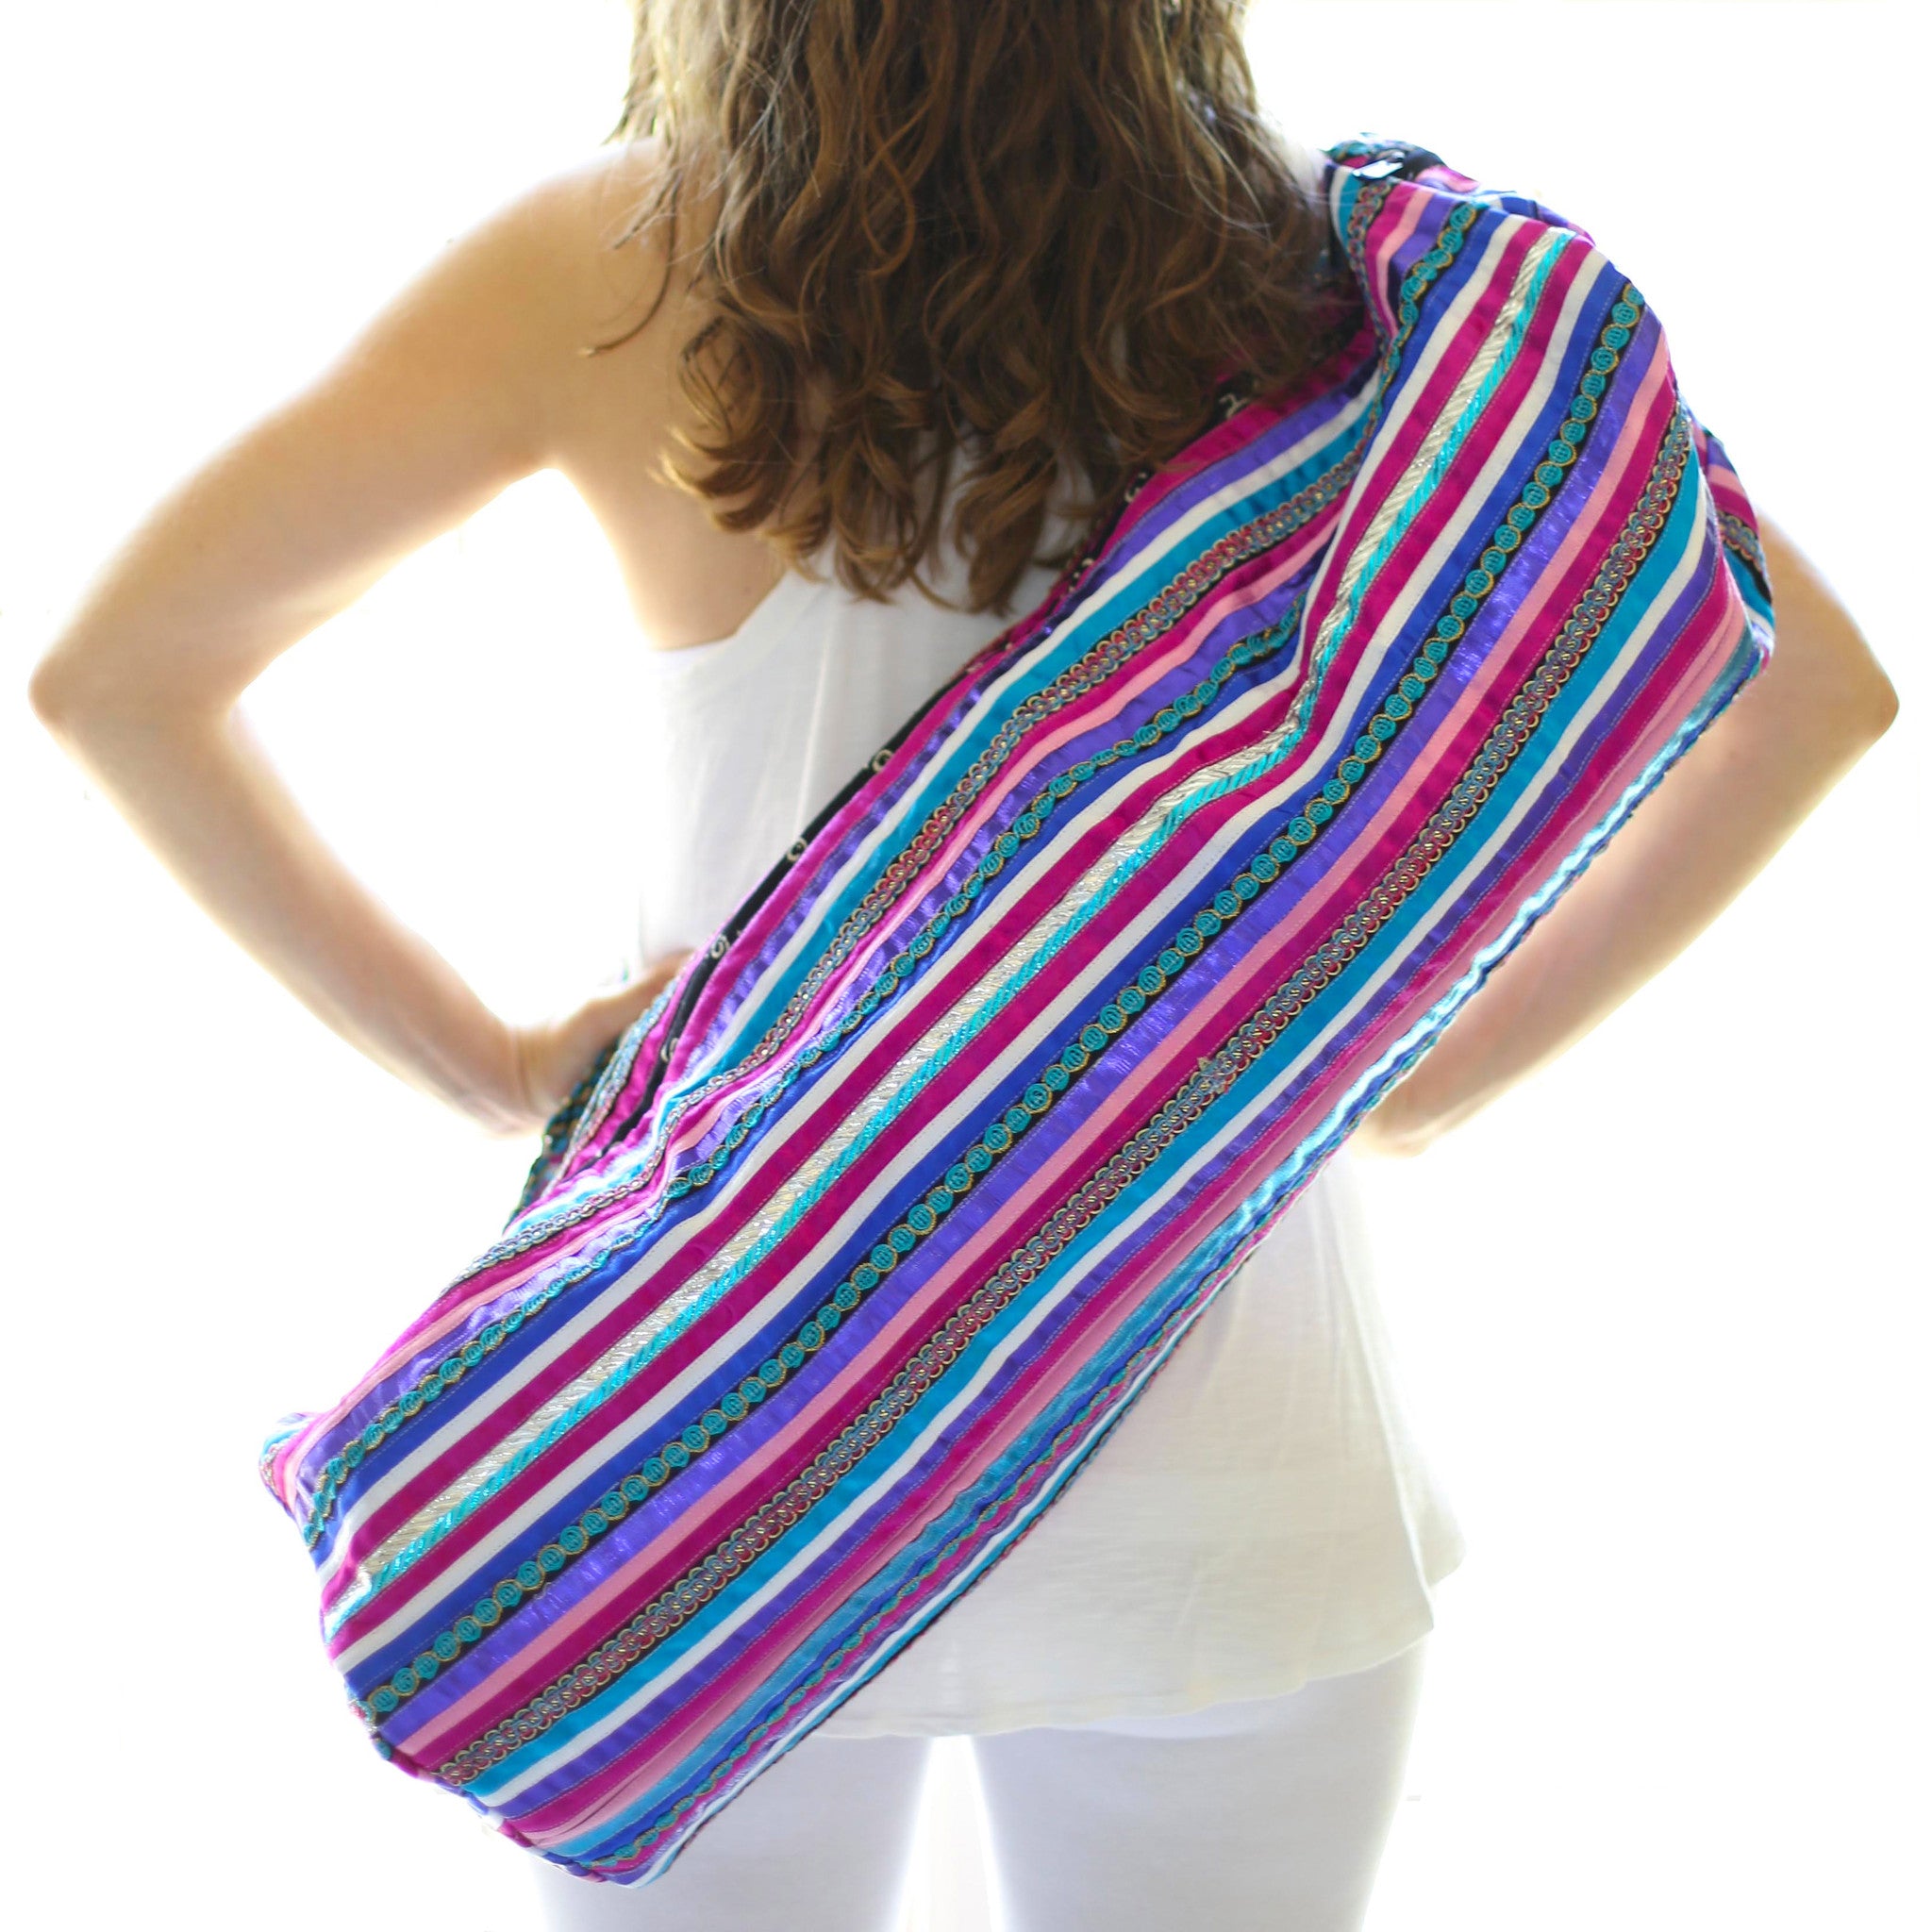 Yoga Mat Bag  Fashion Yoga Bag Backpack with Zipper Pocket for Valuab